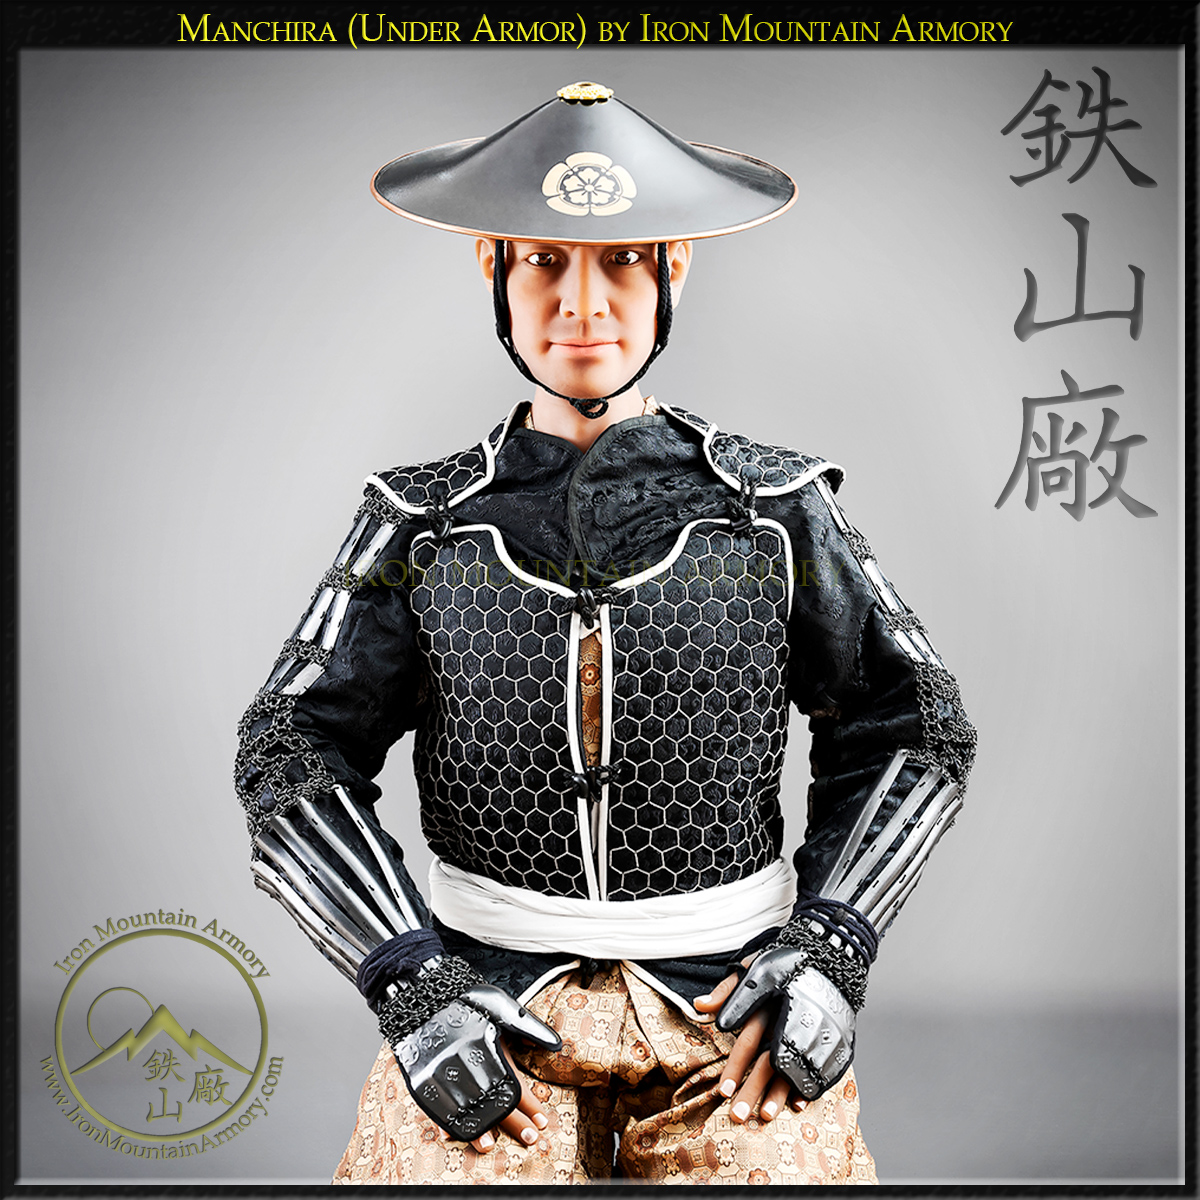 https://shop.samurai-armor.com/wp-content/uploads/2018/08/Manchira-Under-Armor-Detail-d-by-Iron-Mountain-Armory.jpg